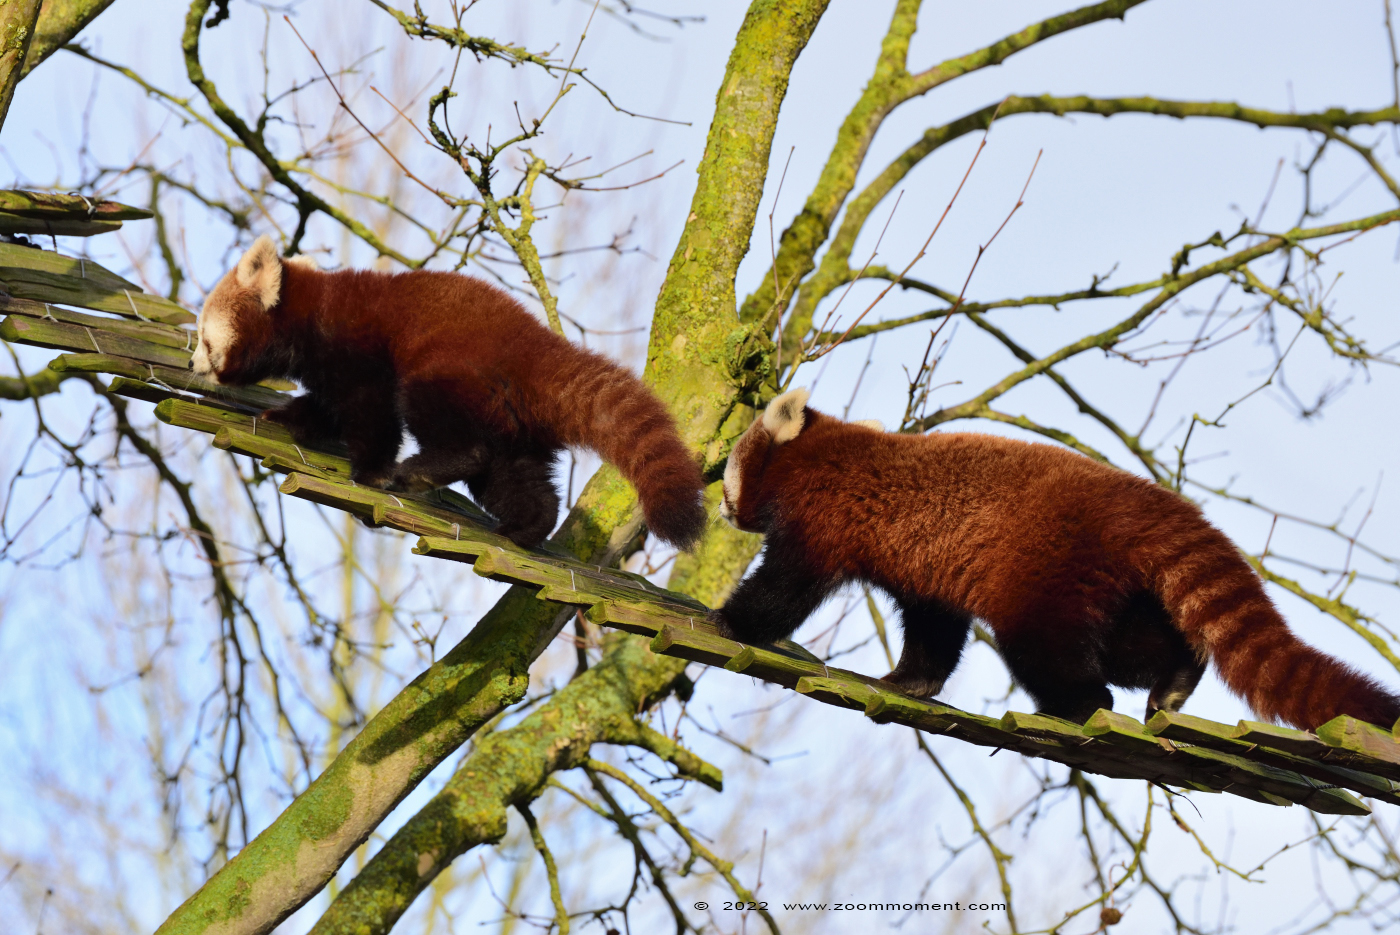 rode of kleine panda ( Ailurus fulgens ) lesser or red panda
Trefwoorden: Overloon zooparc Nederland rode kleine panda Ailurus fulgens lesser red panda